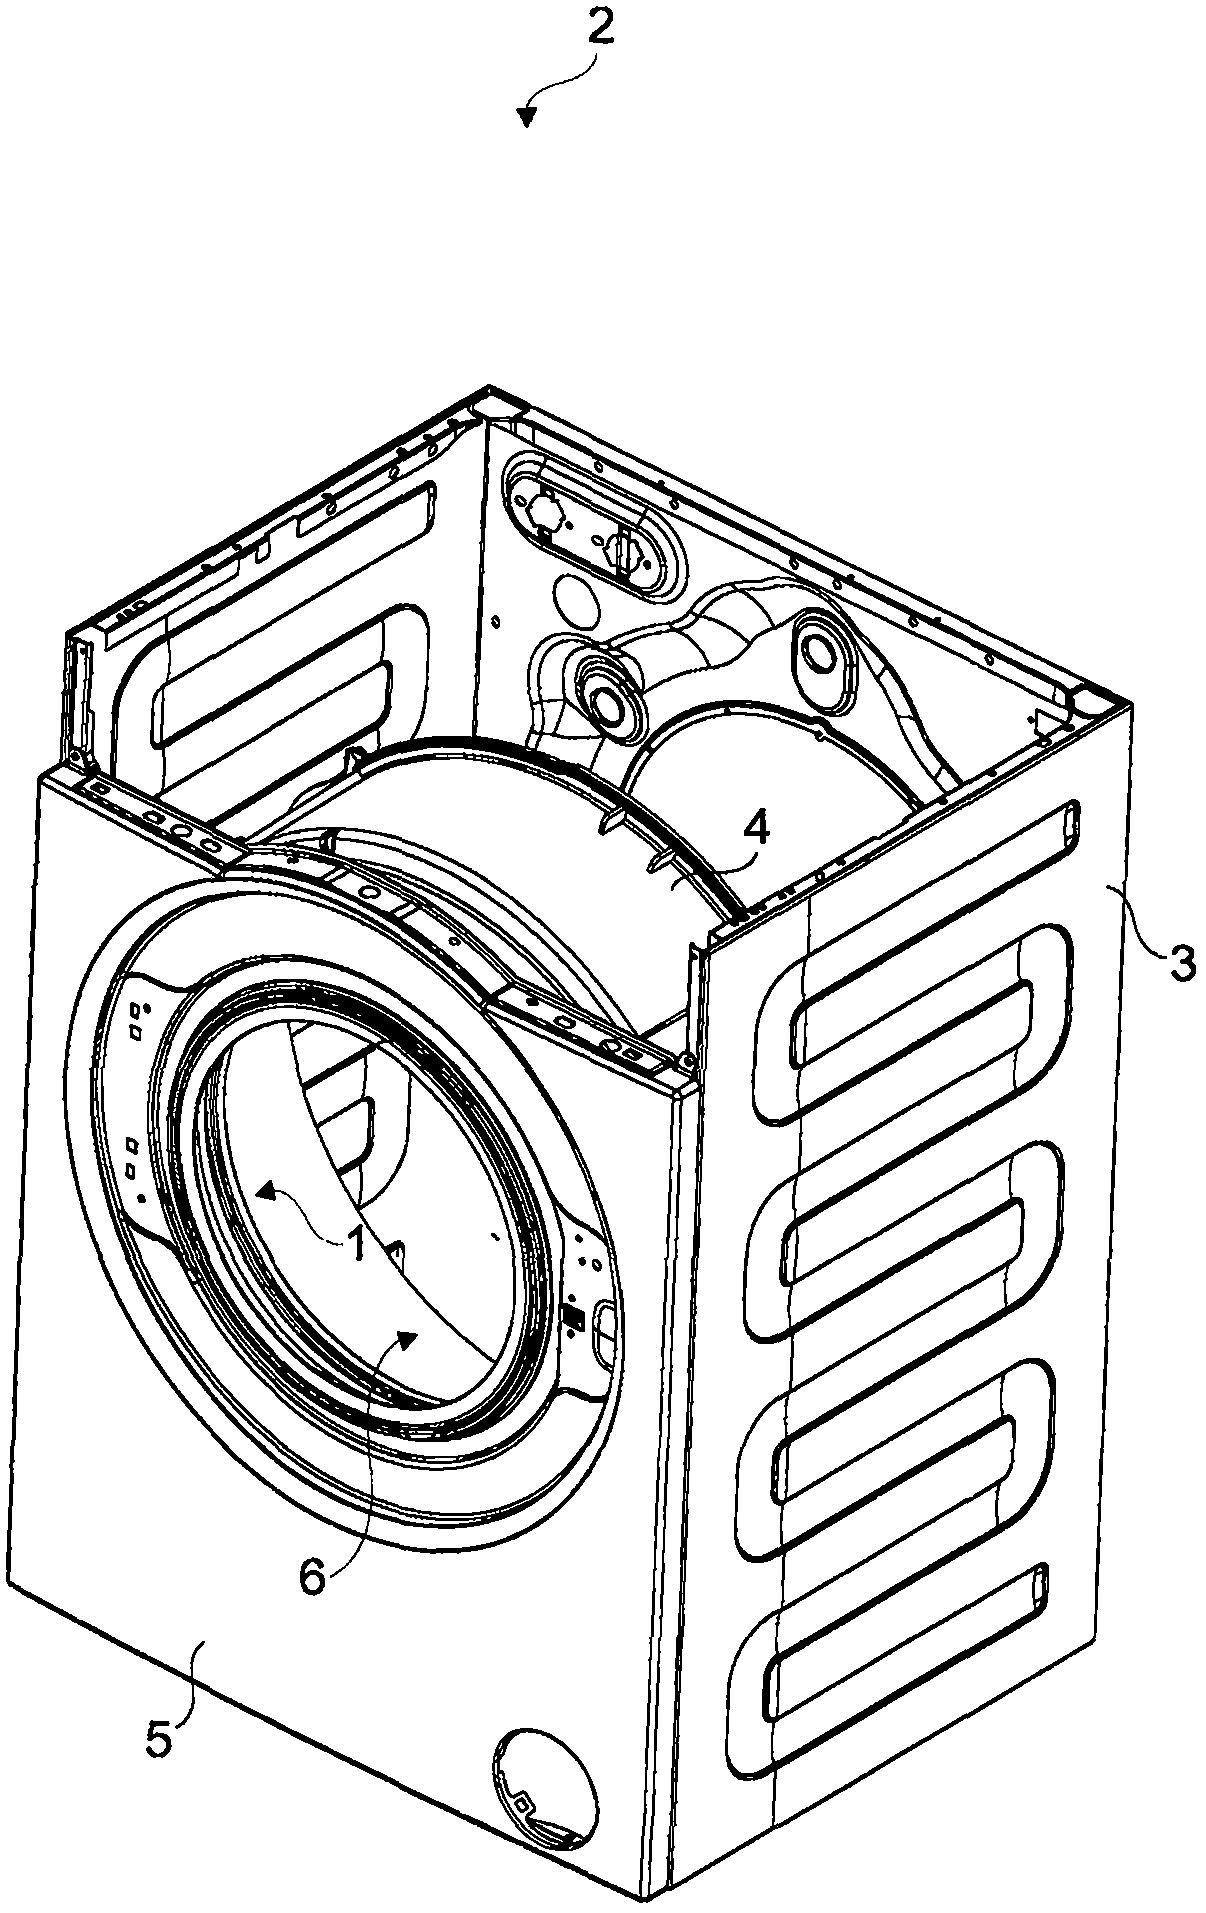 Washers used in washing machines